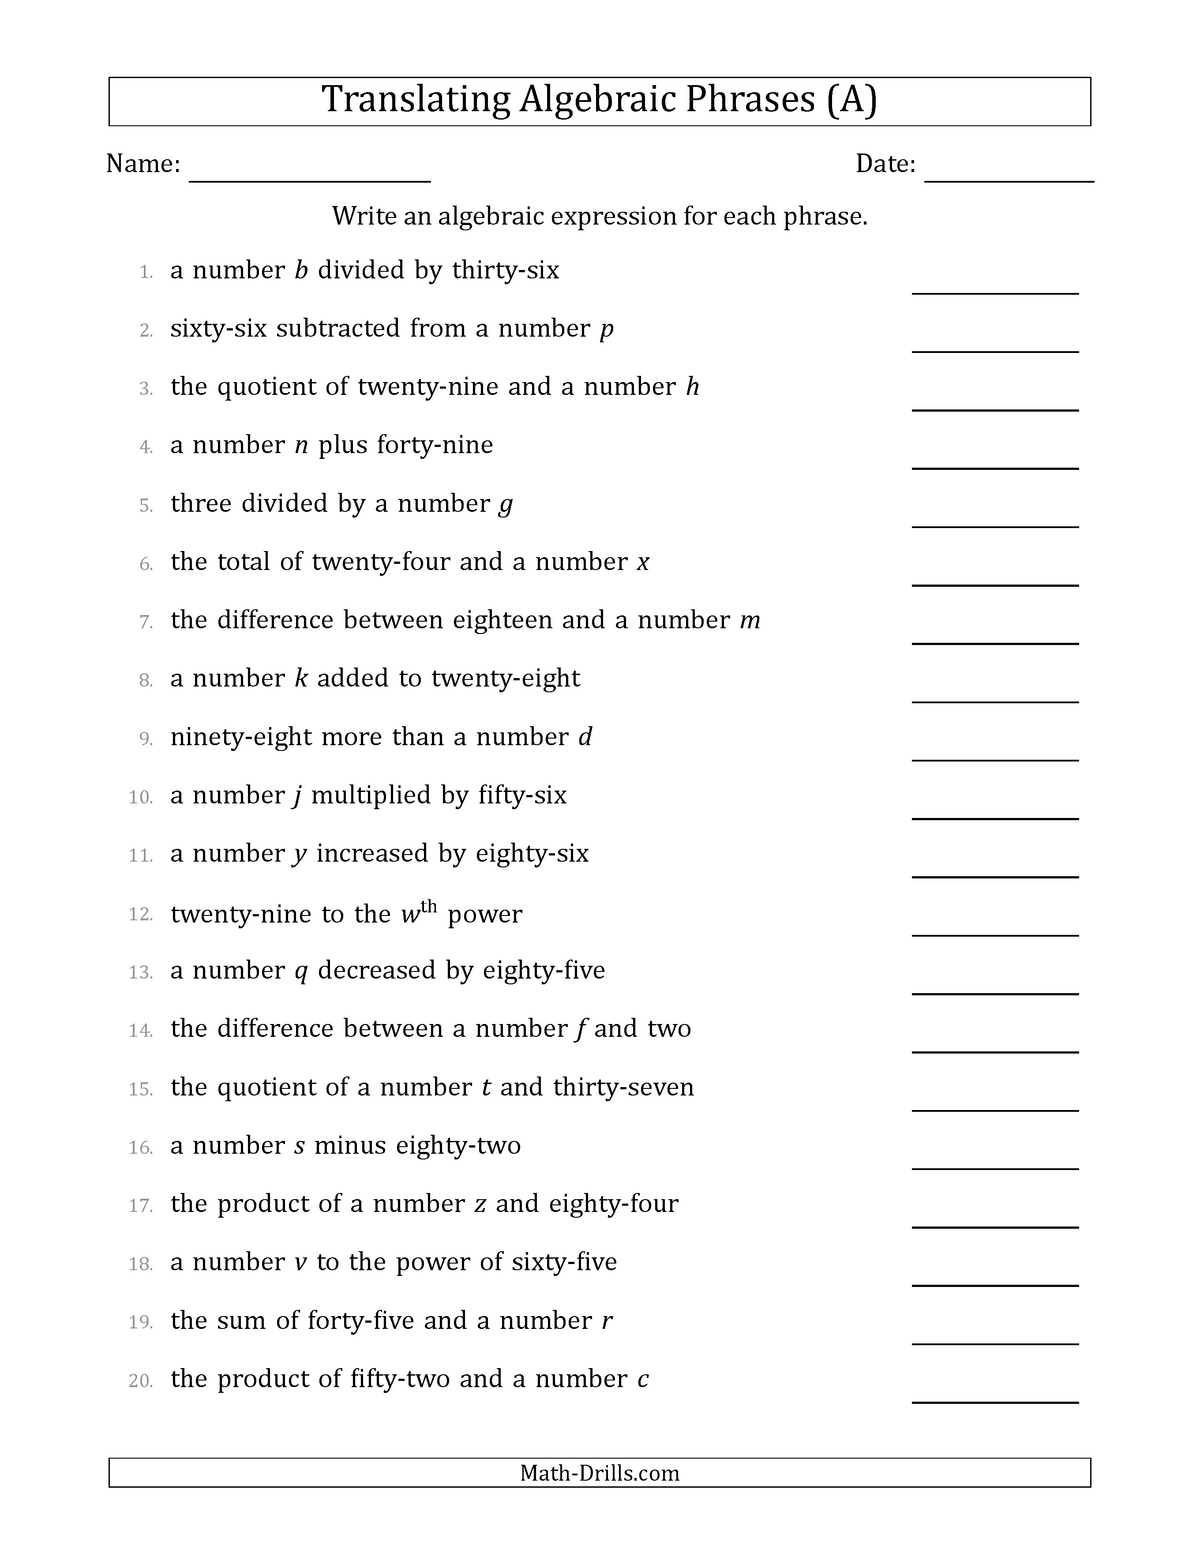 Algebra translating algebraic phrases 22 - M E STU 22 Regarding Translating Algebraic Expressions Worksheet